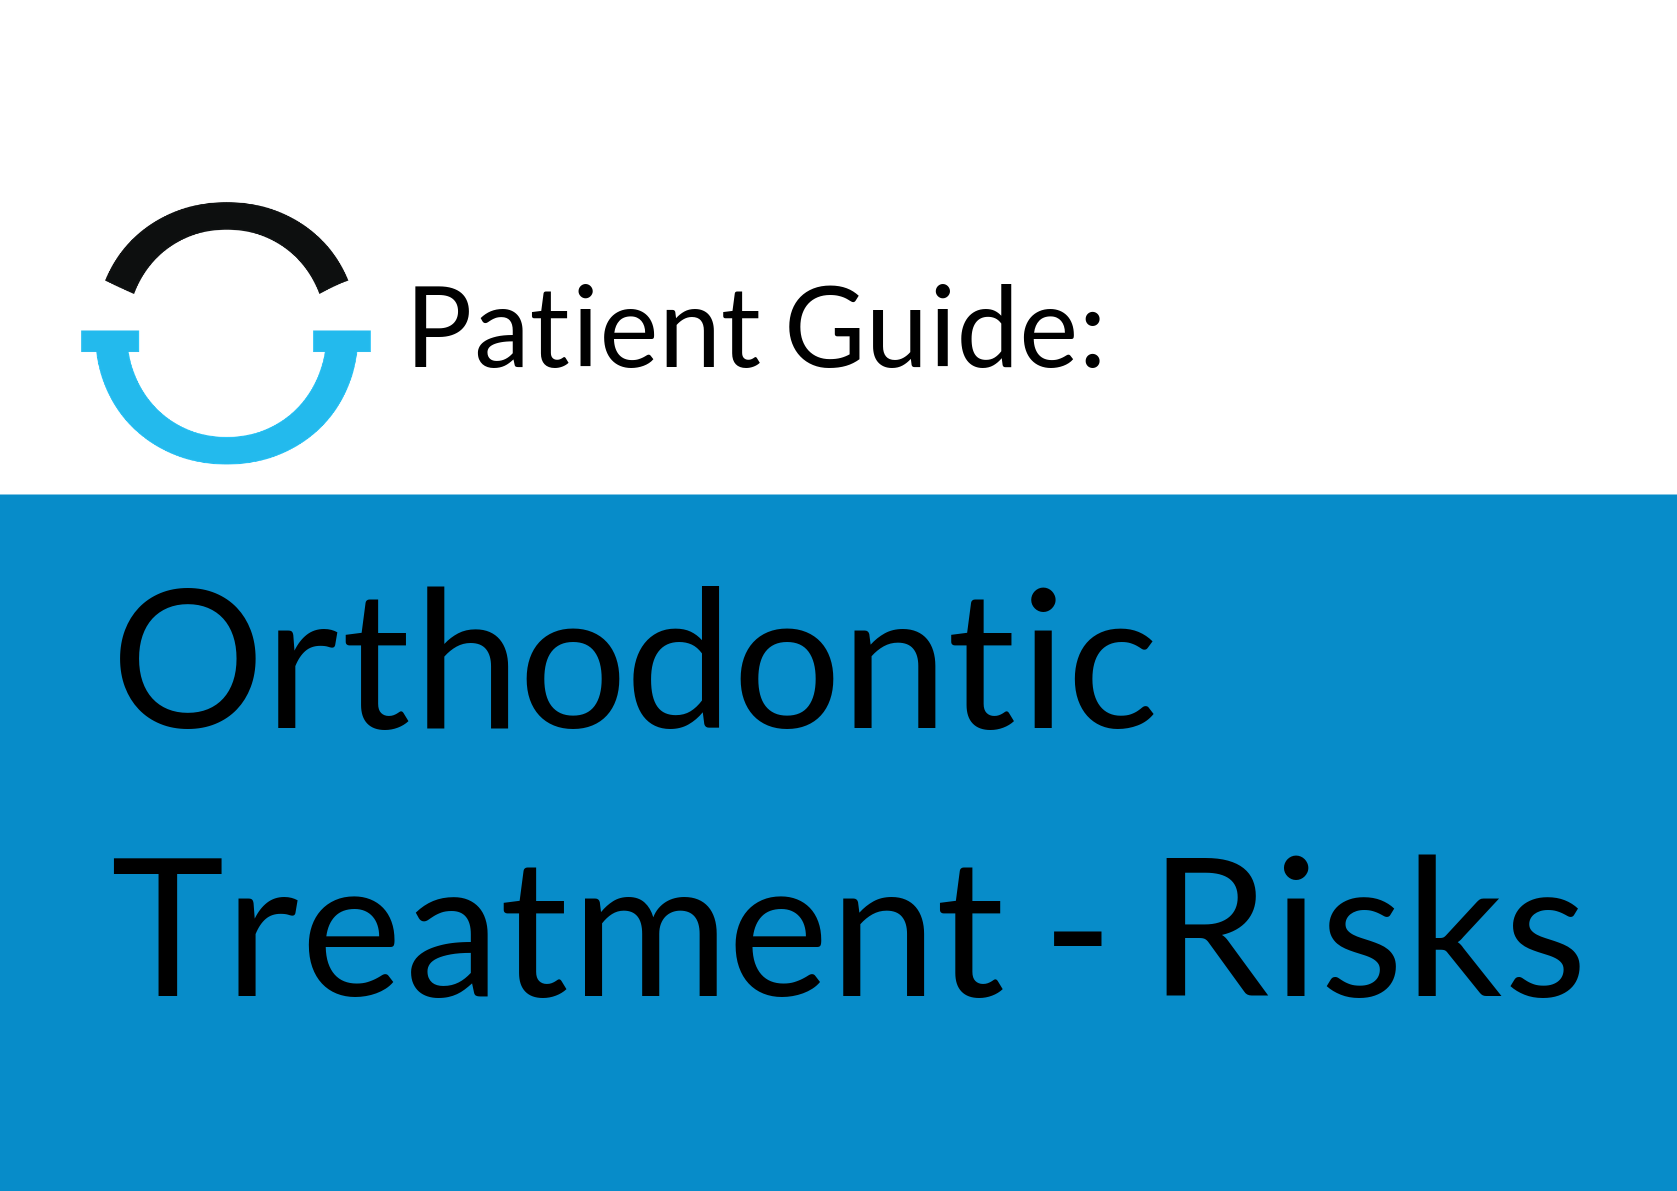 Patient Guide Header Image – Orthodontic Treatment Risks LARGE